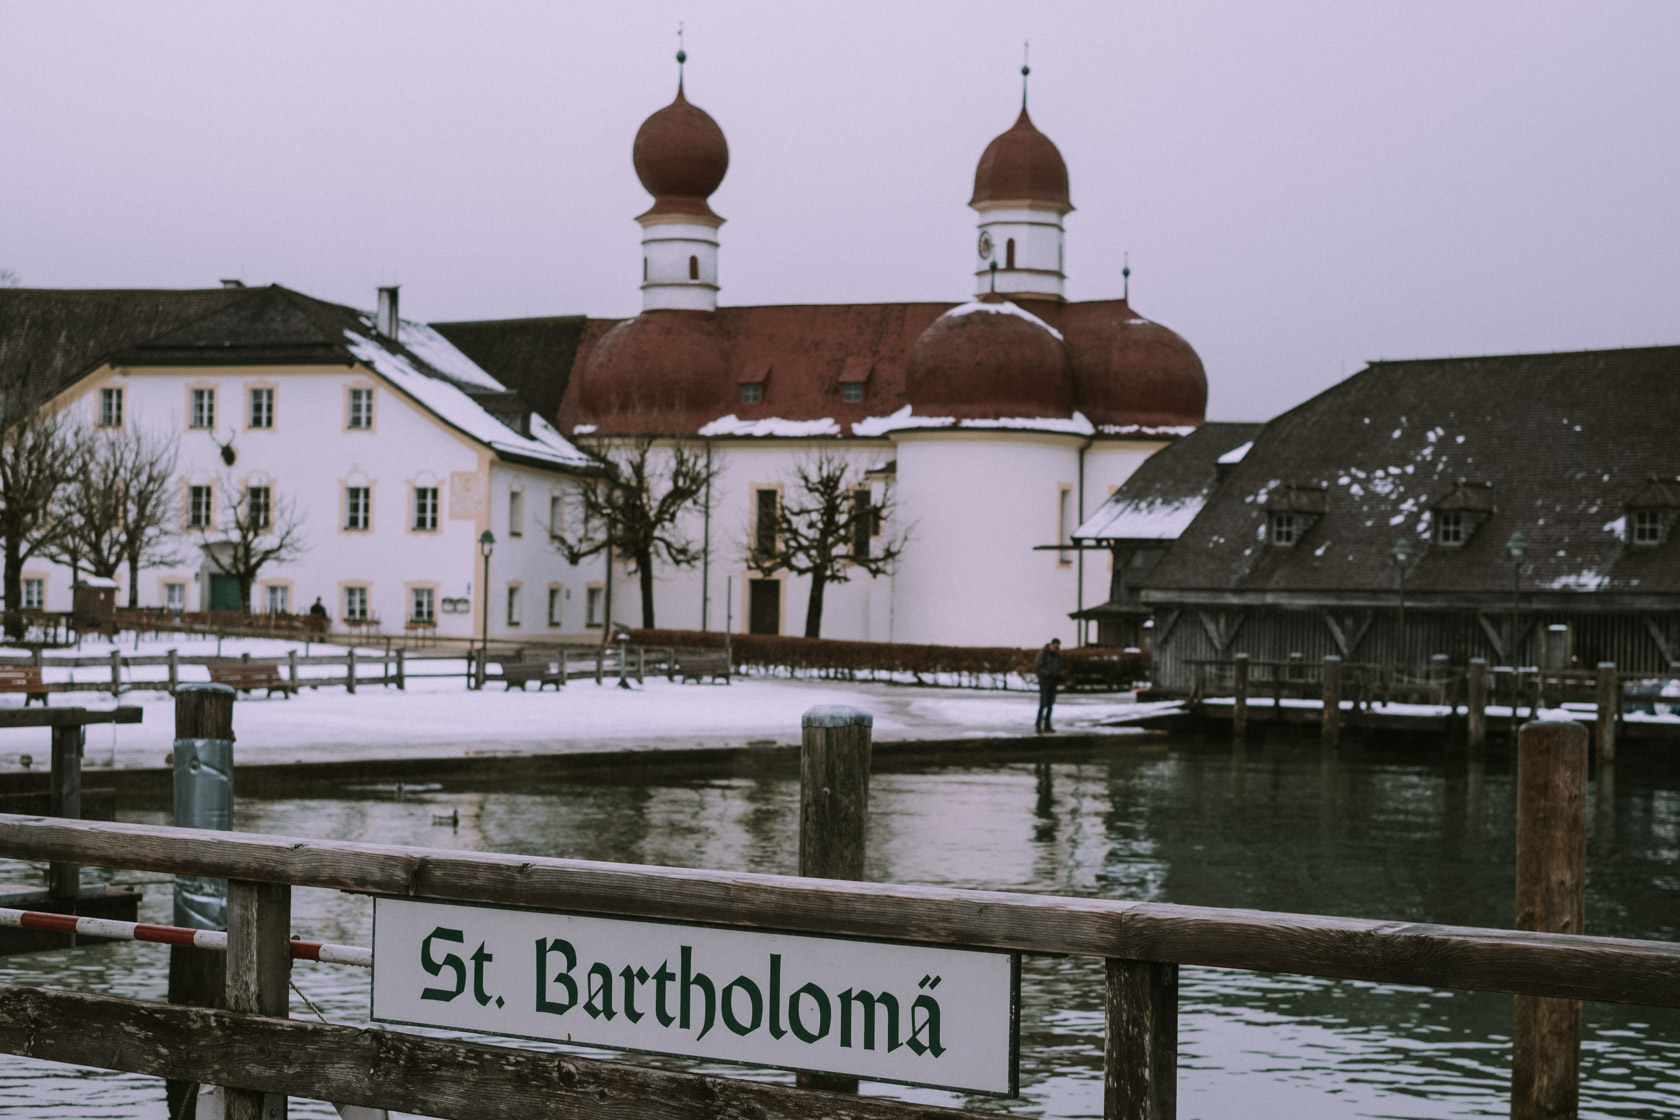 St. Bartholomew's in Winter